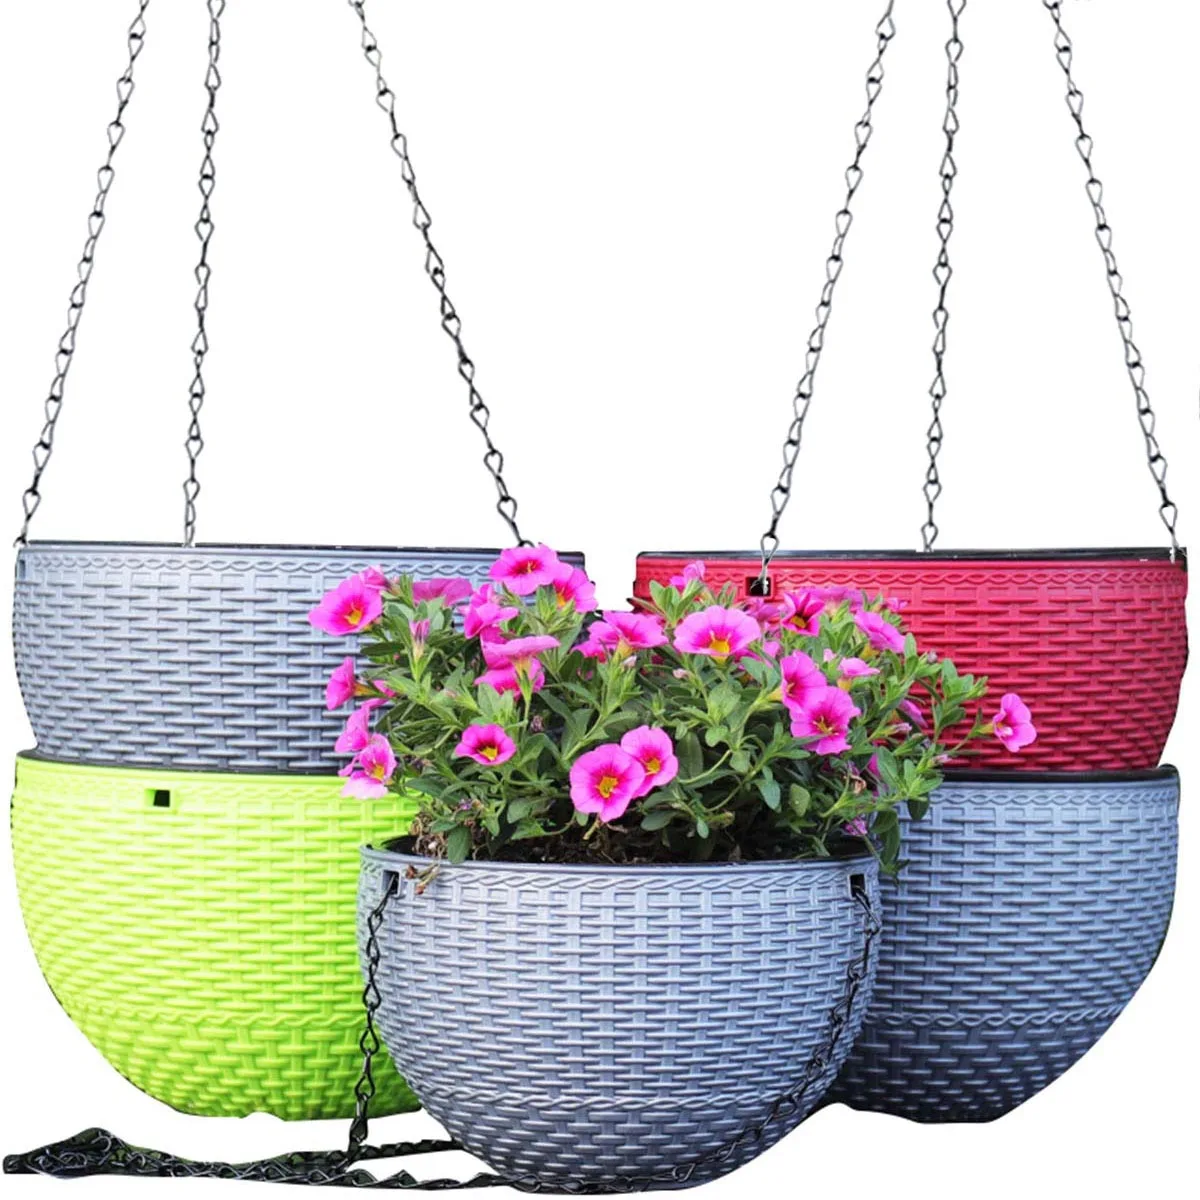 Hanging Flower Plant Pot Chain Basket Planter Holder Home Garden Balcony New x 1 